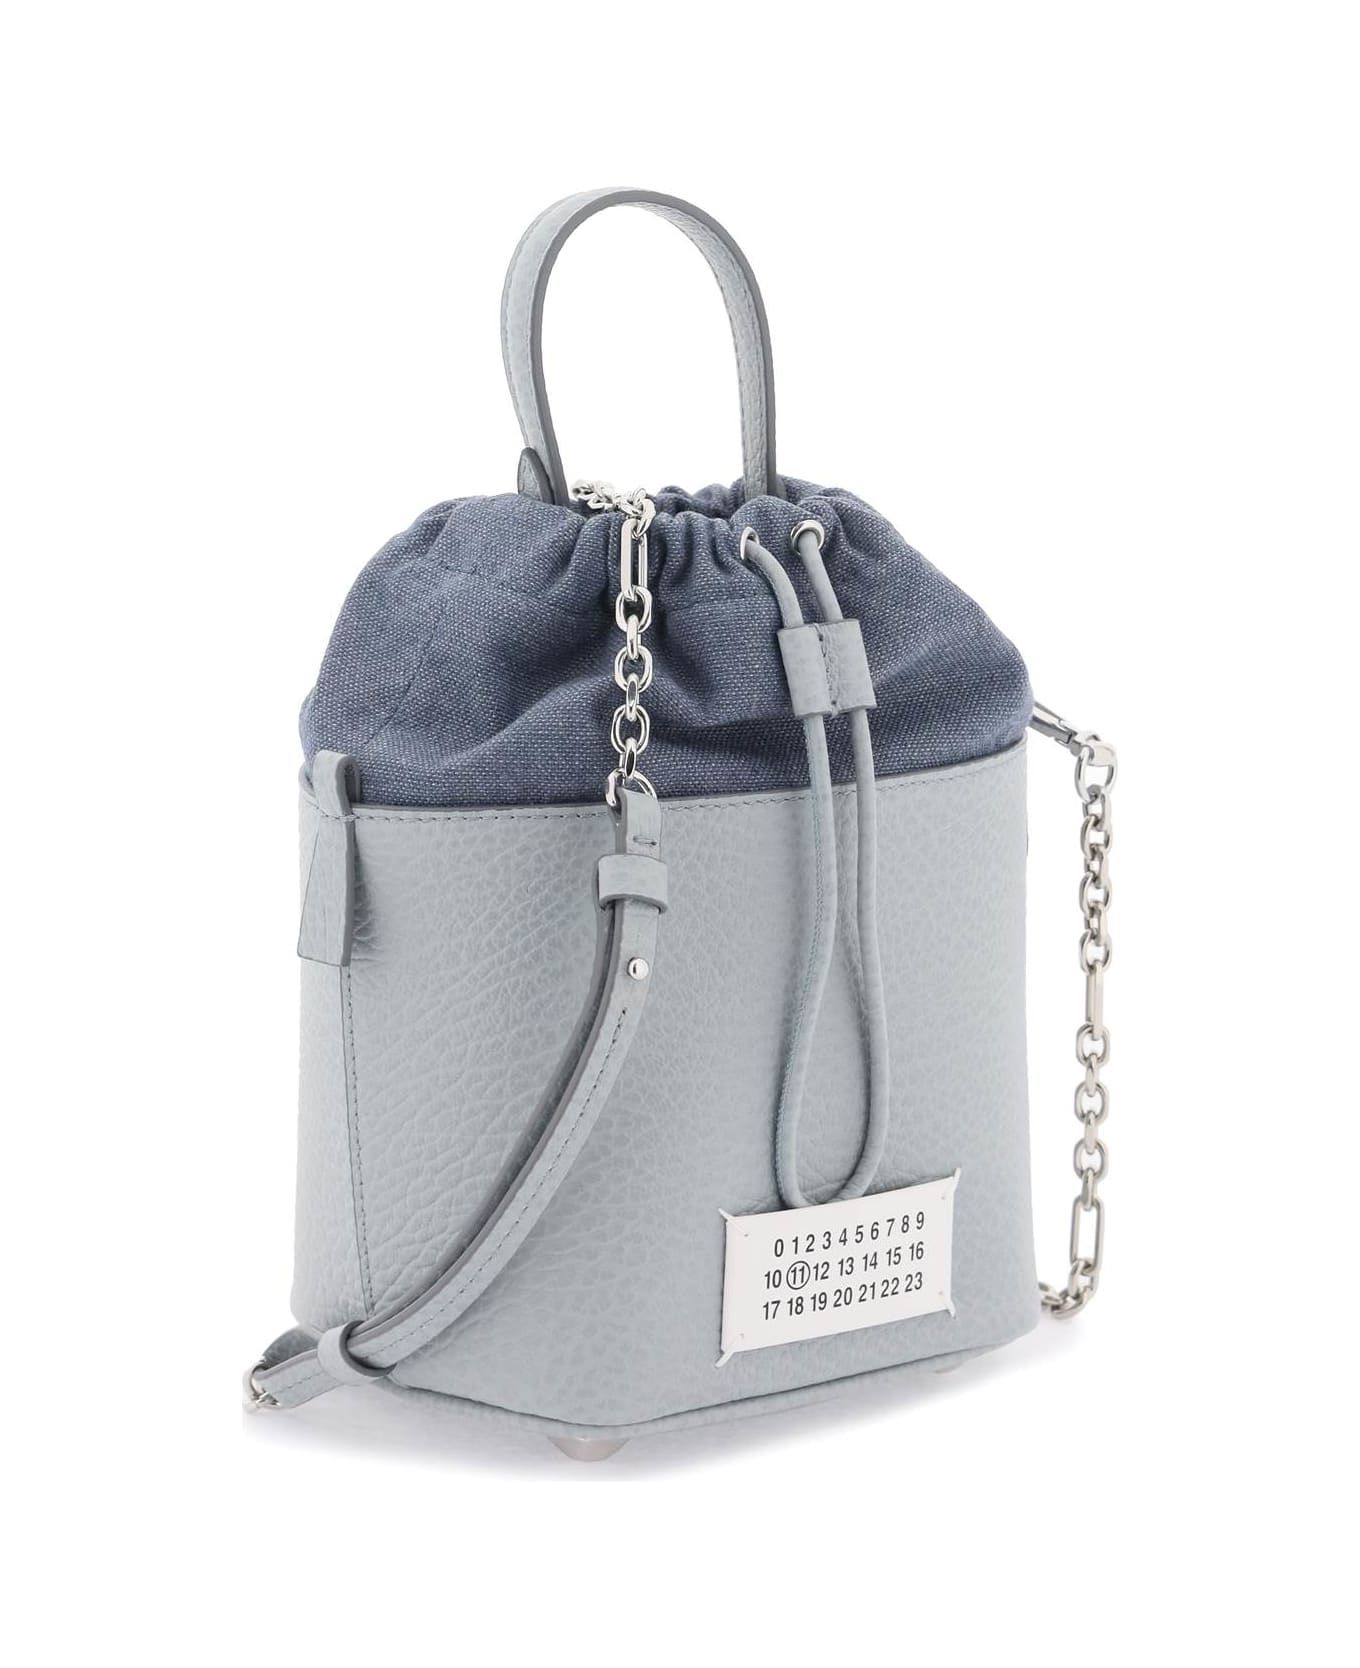 Maison Margiela 5ac Bucket Bag - MIST (Light blue)